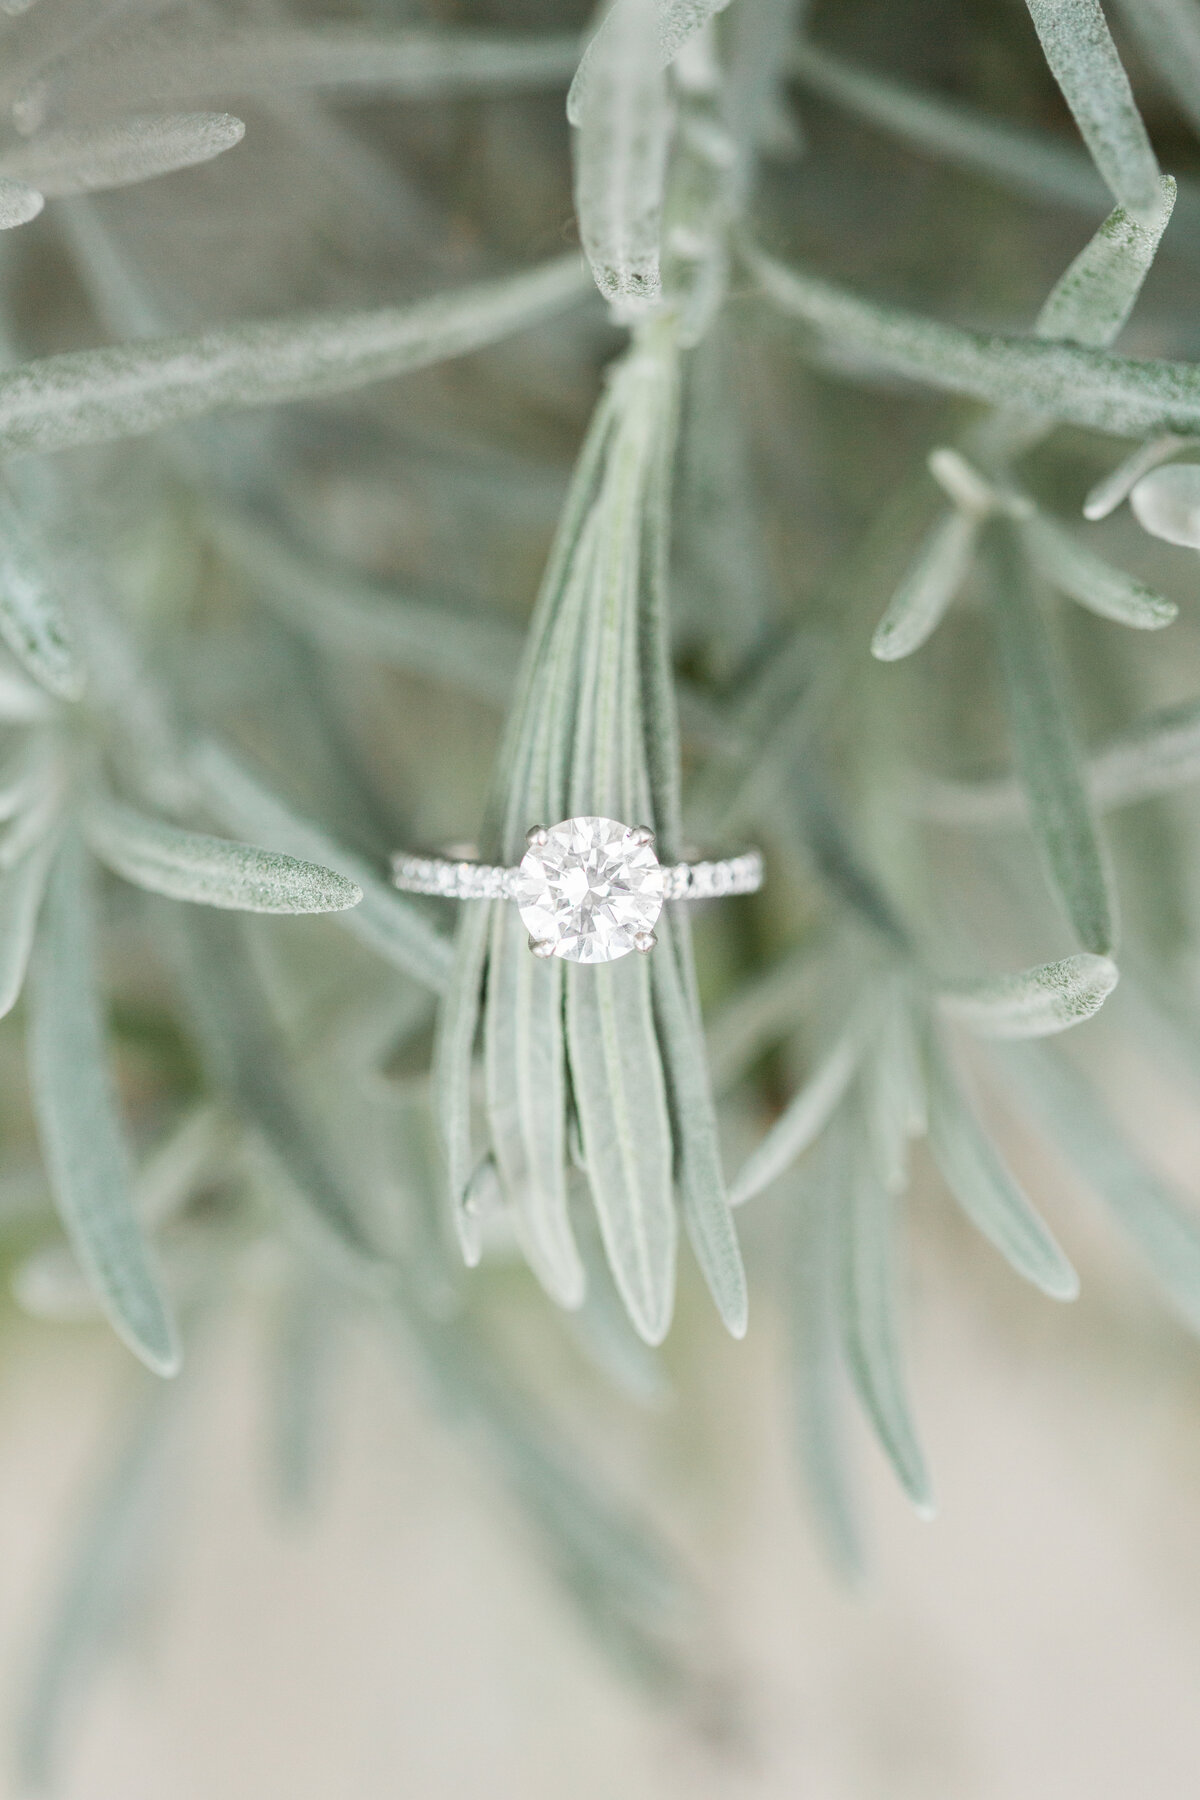 diamond ring close up detail photo